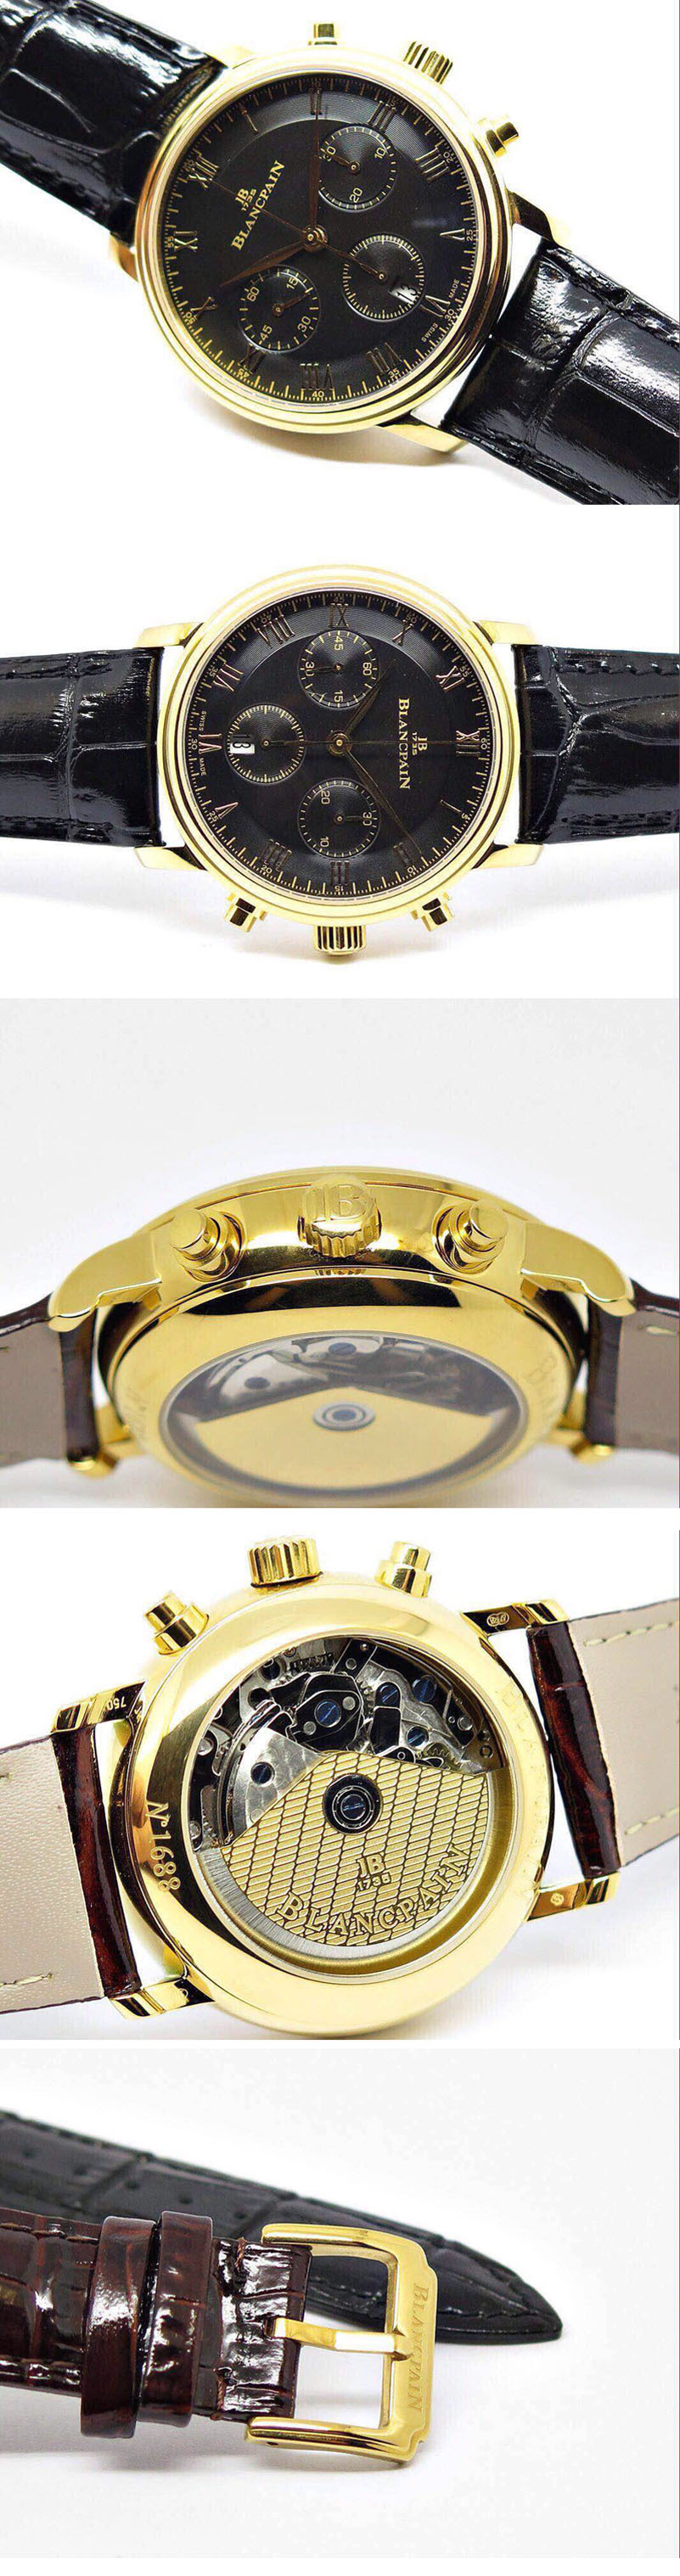 Replica Blancpain Watches